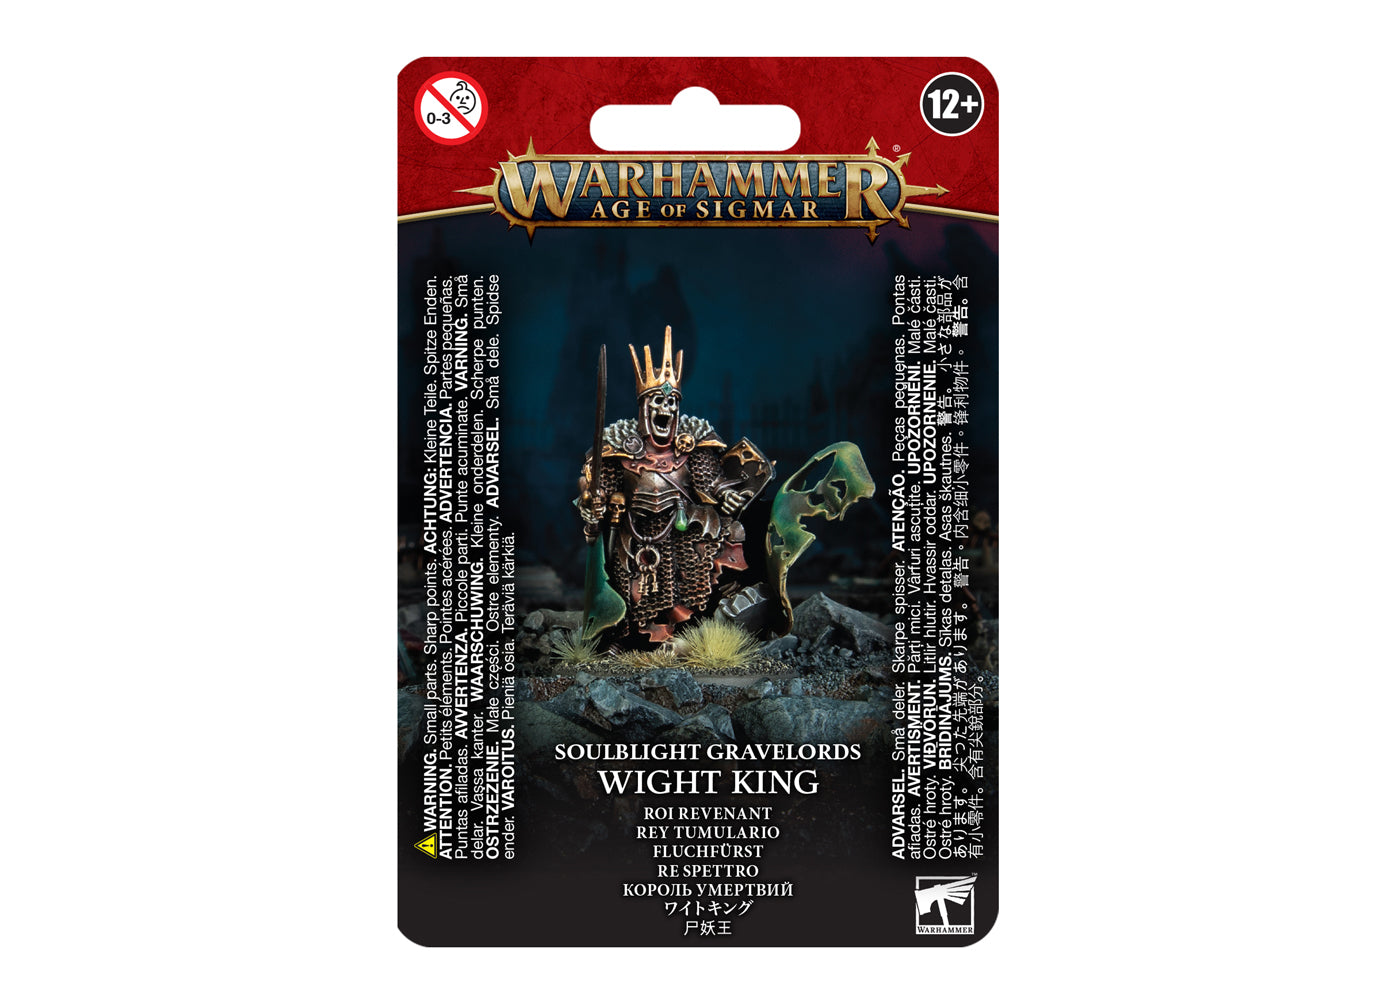 Soulblight Gravelords: Wight king